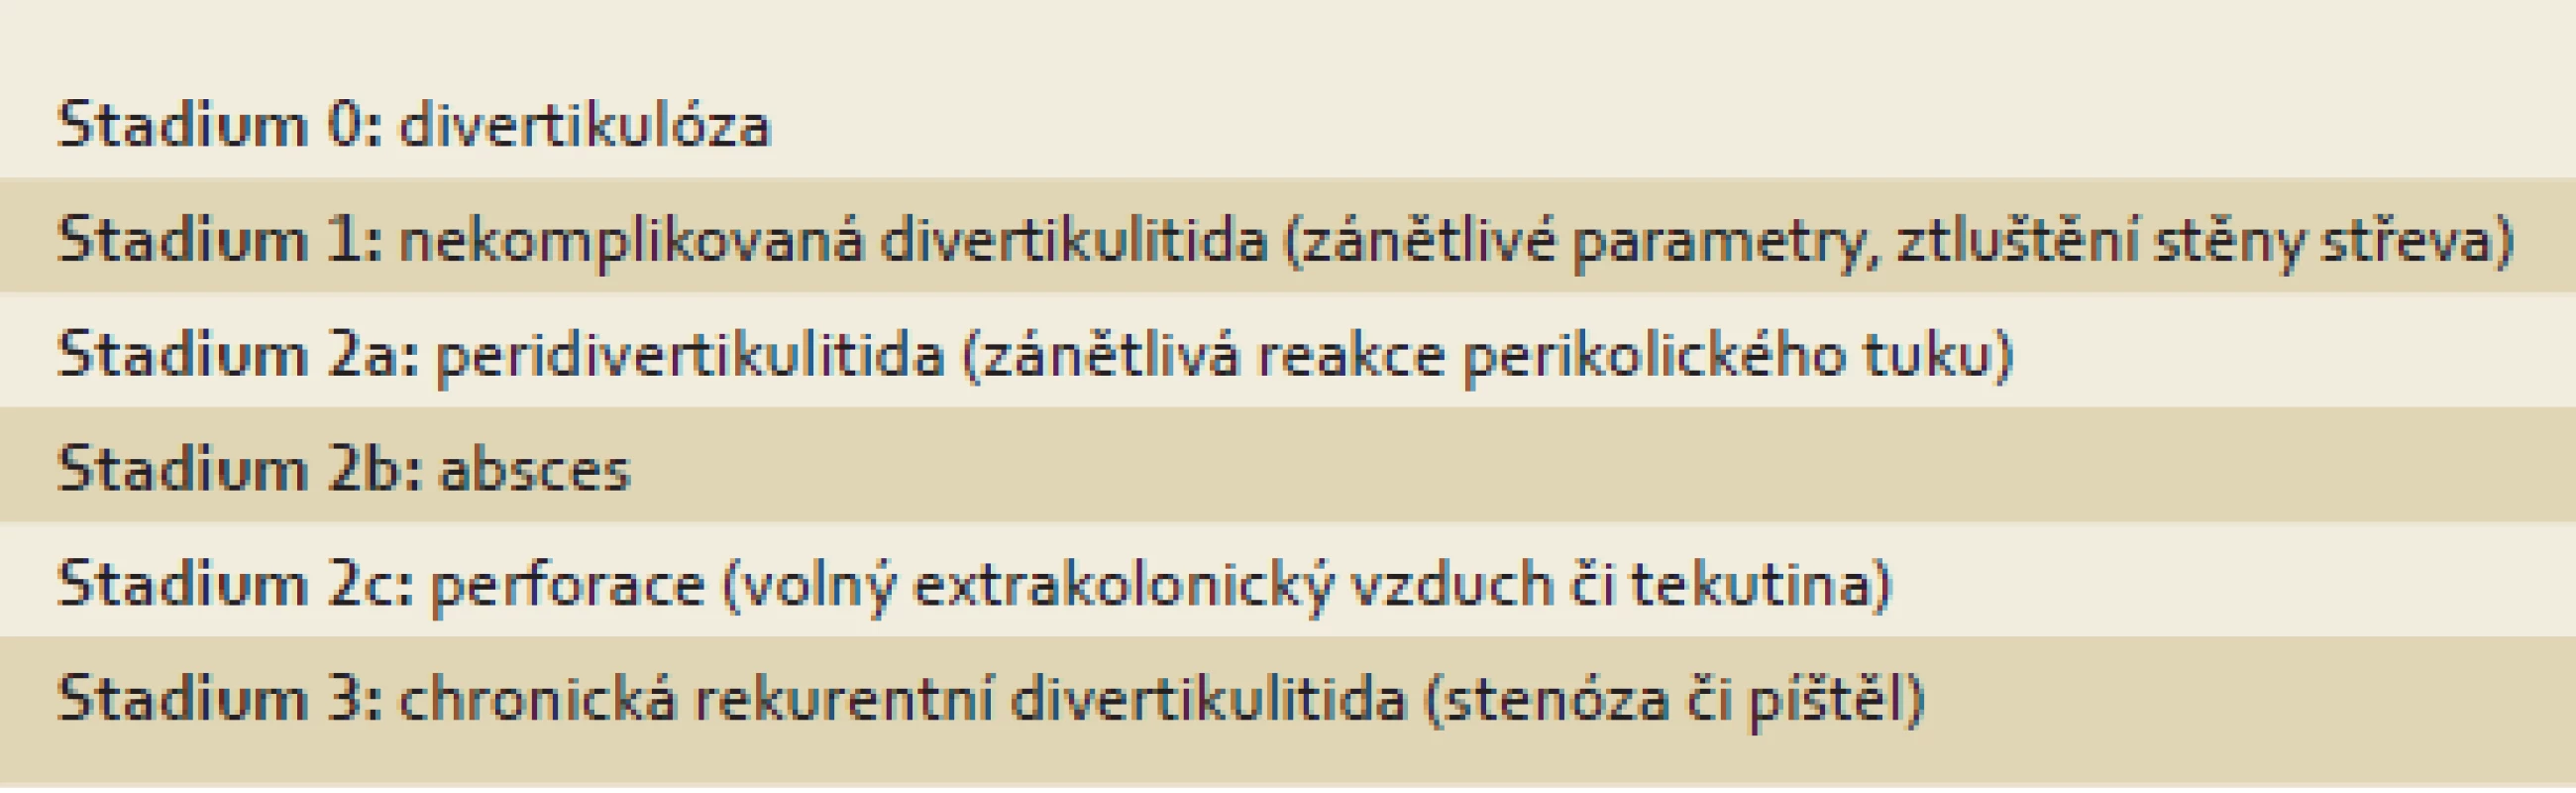 Klasifikace divertikulitidy dle Hansena a Stocka.
Tab. 2. Classification of diverticulitis according to Hansen and Stock.